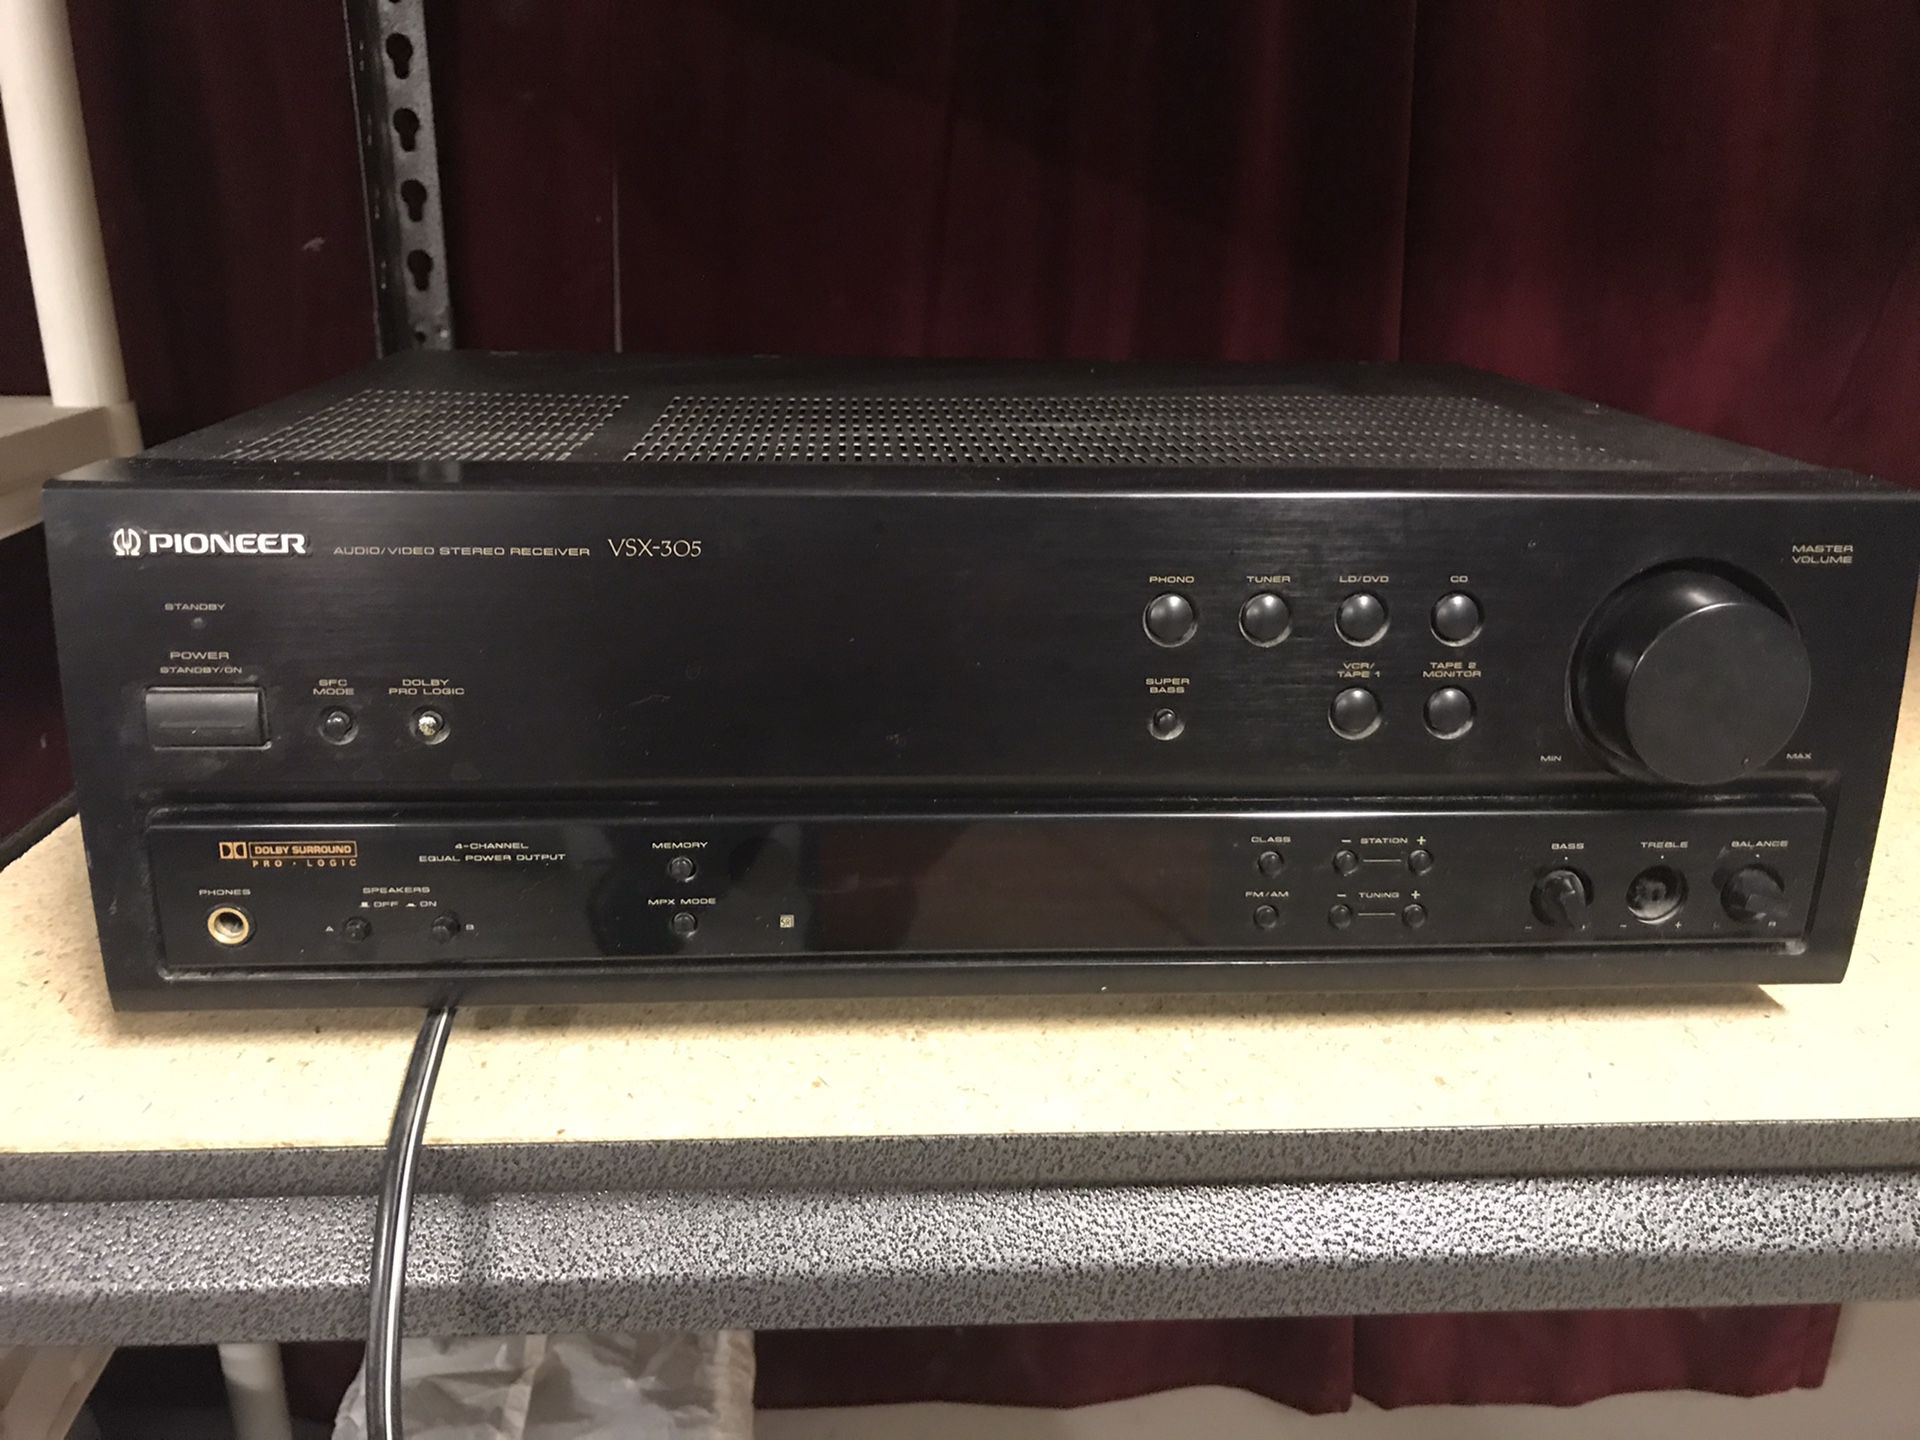 Pioneer audio/video stereo receiver VSX-305